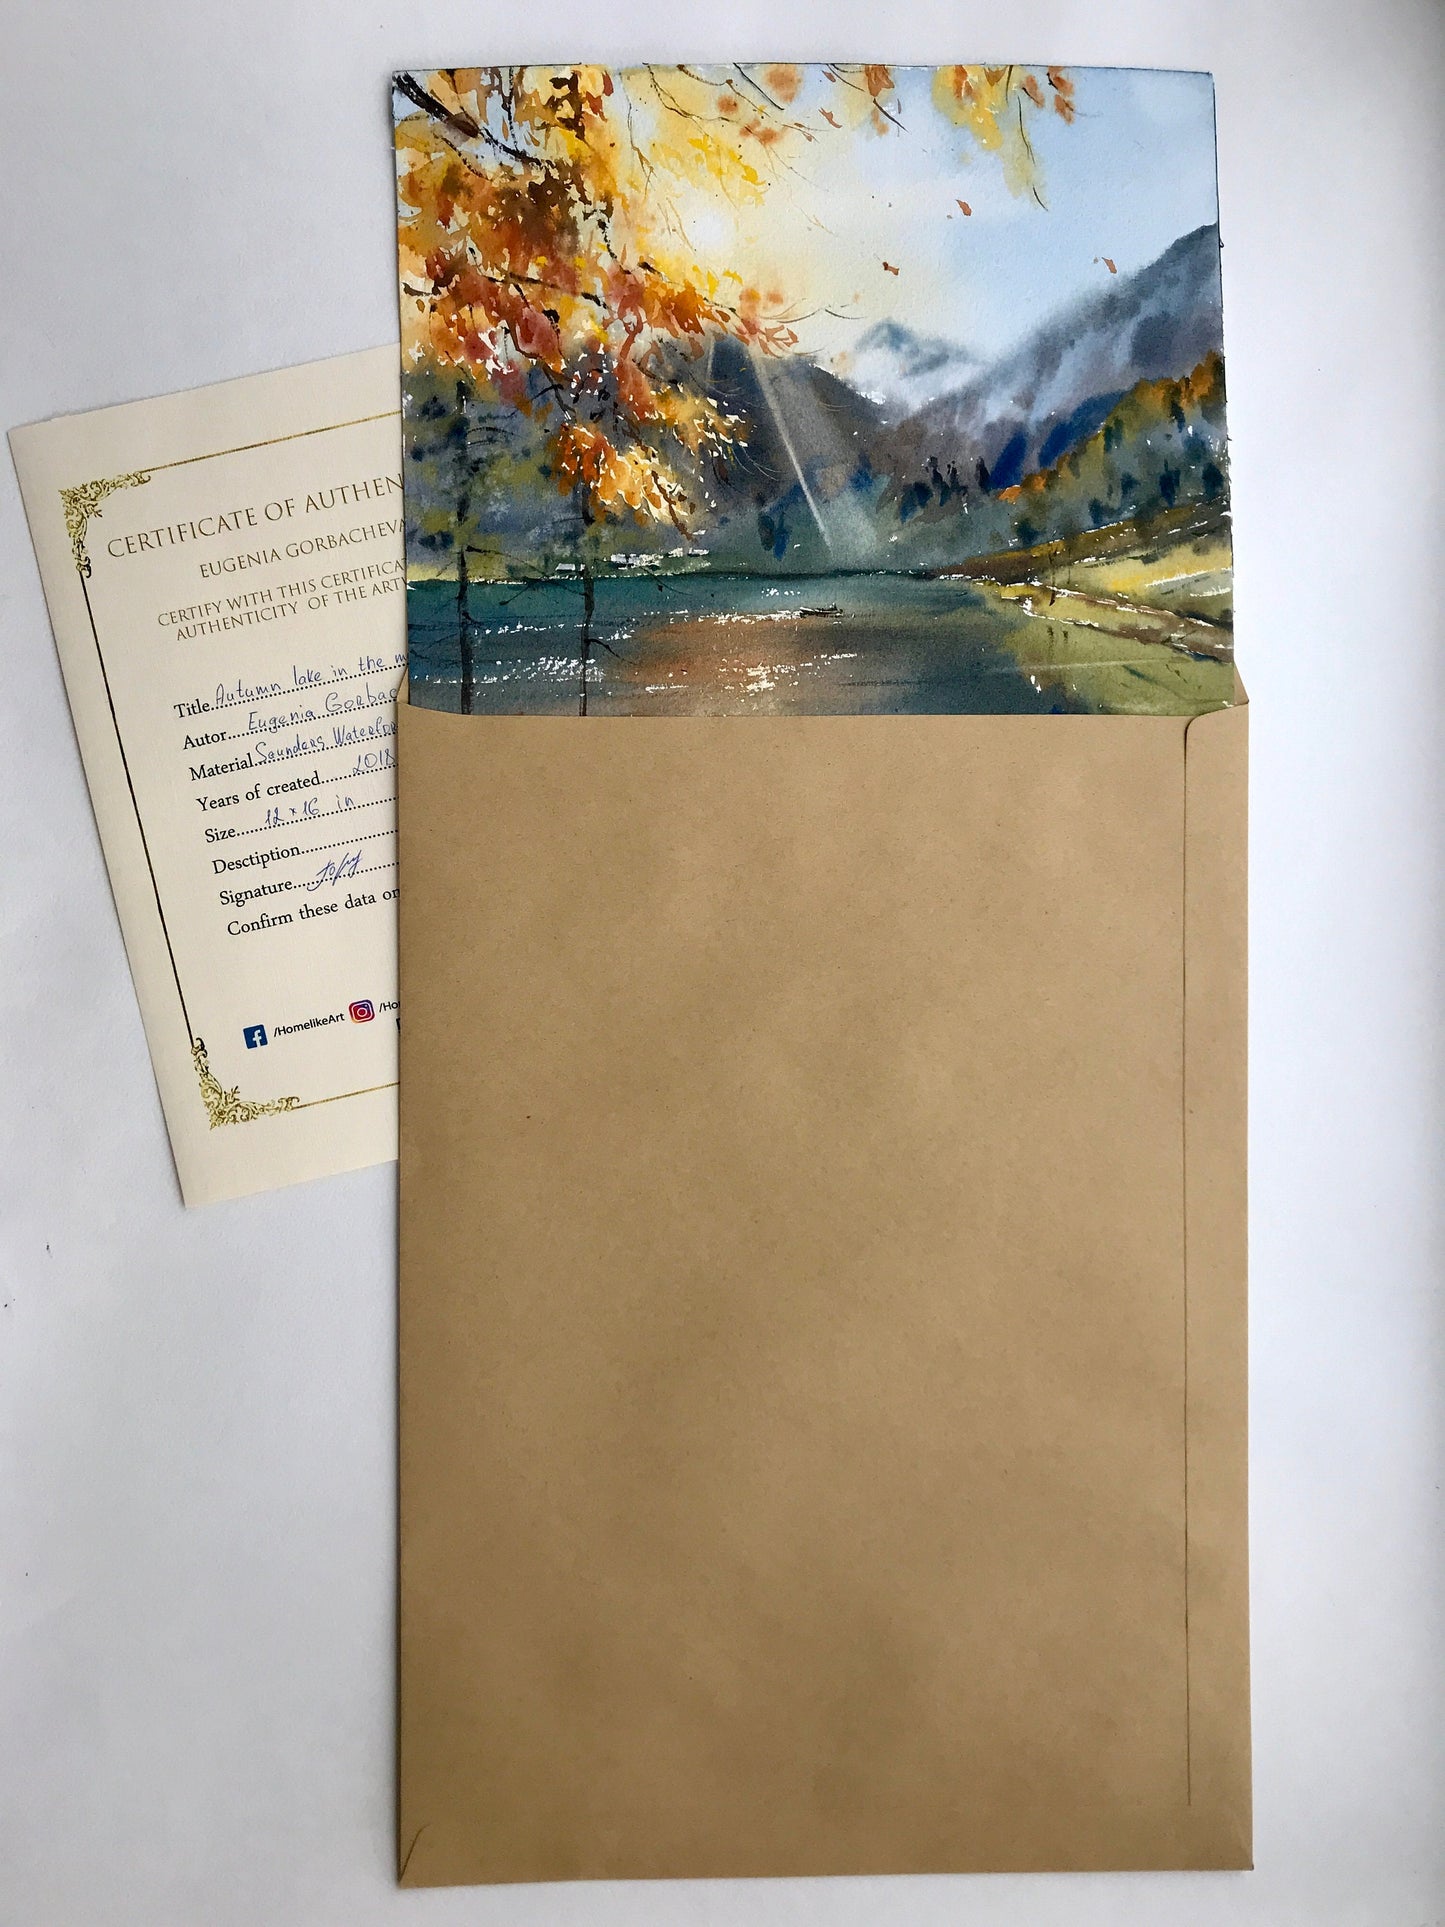 Mountain Forest Painting, Watercolor Original Art, Autumn Lake Artwork, House Wall Art, Landscape, Sailboat, Clouds